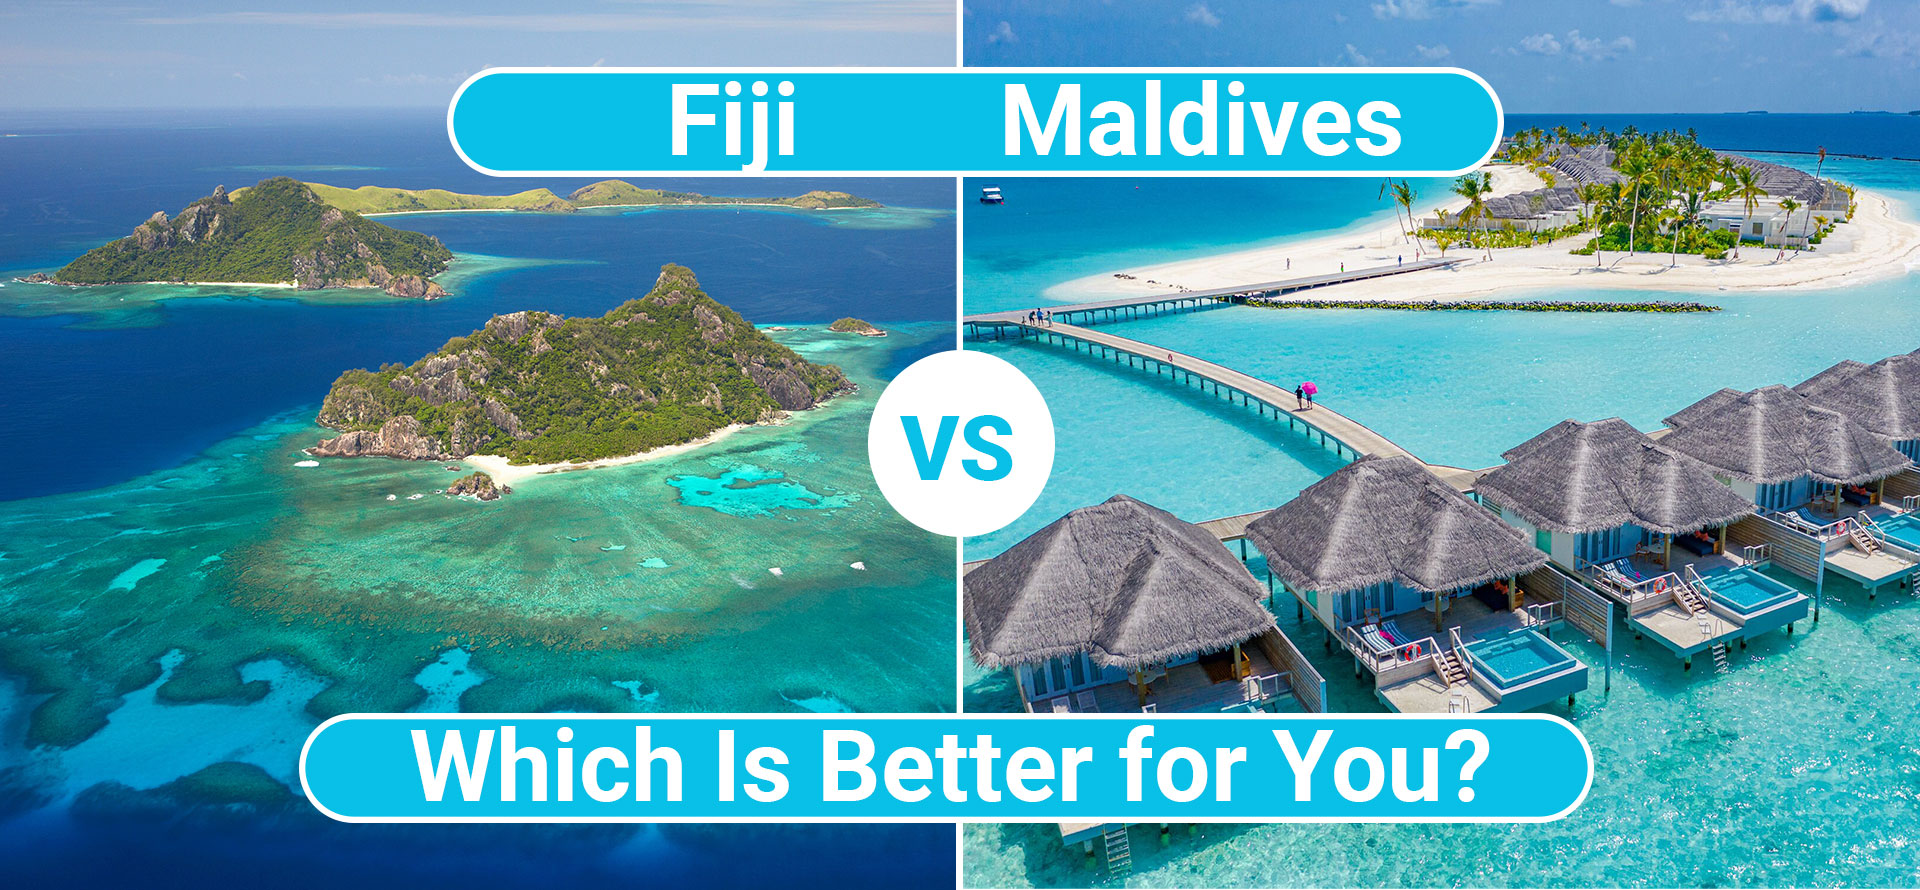 Fiji vs maldives.